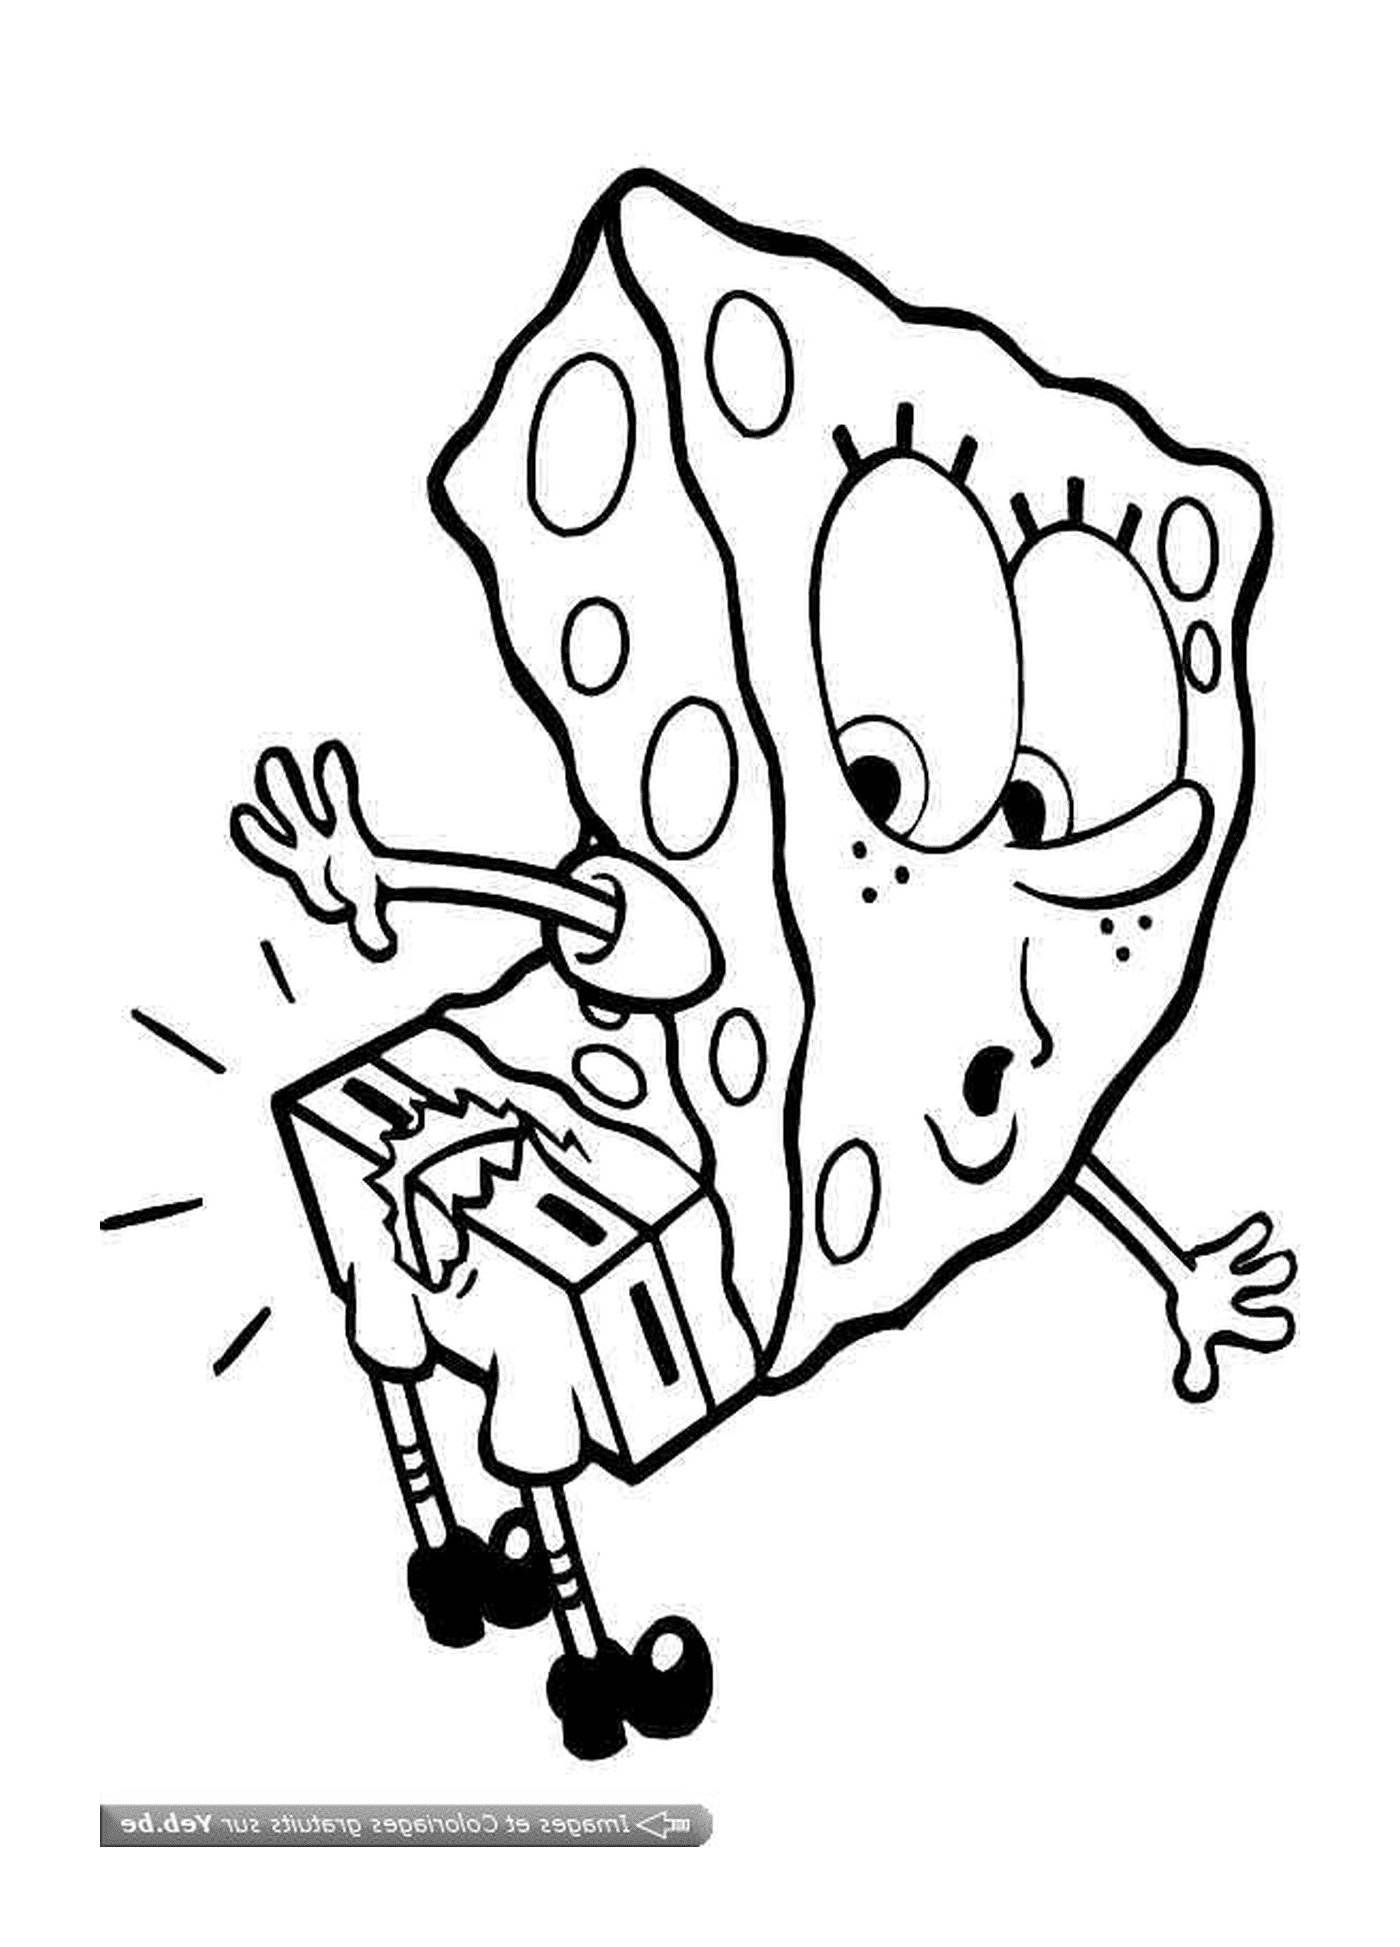  A Sponge Bob holding a carton 